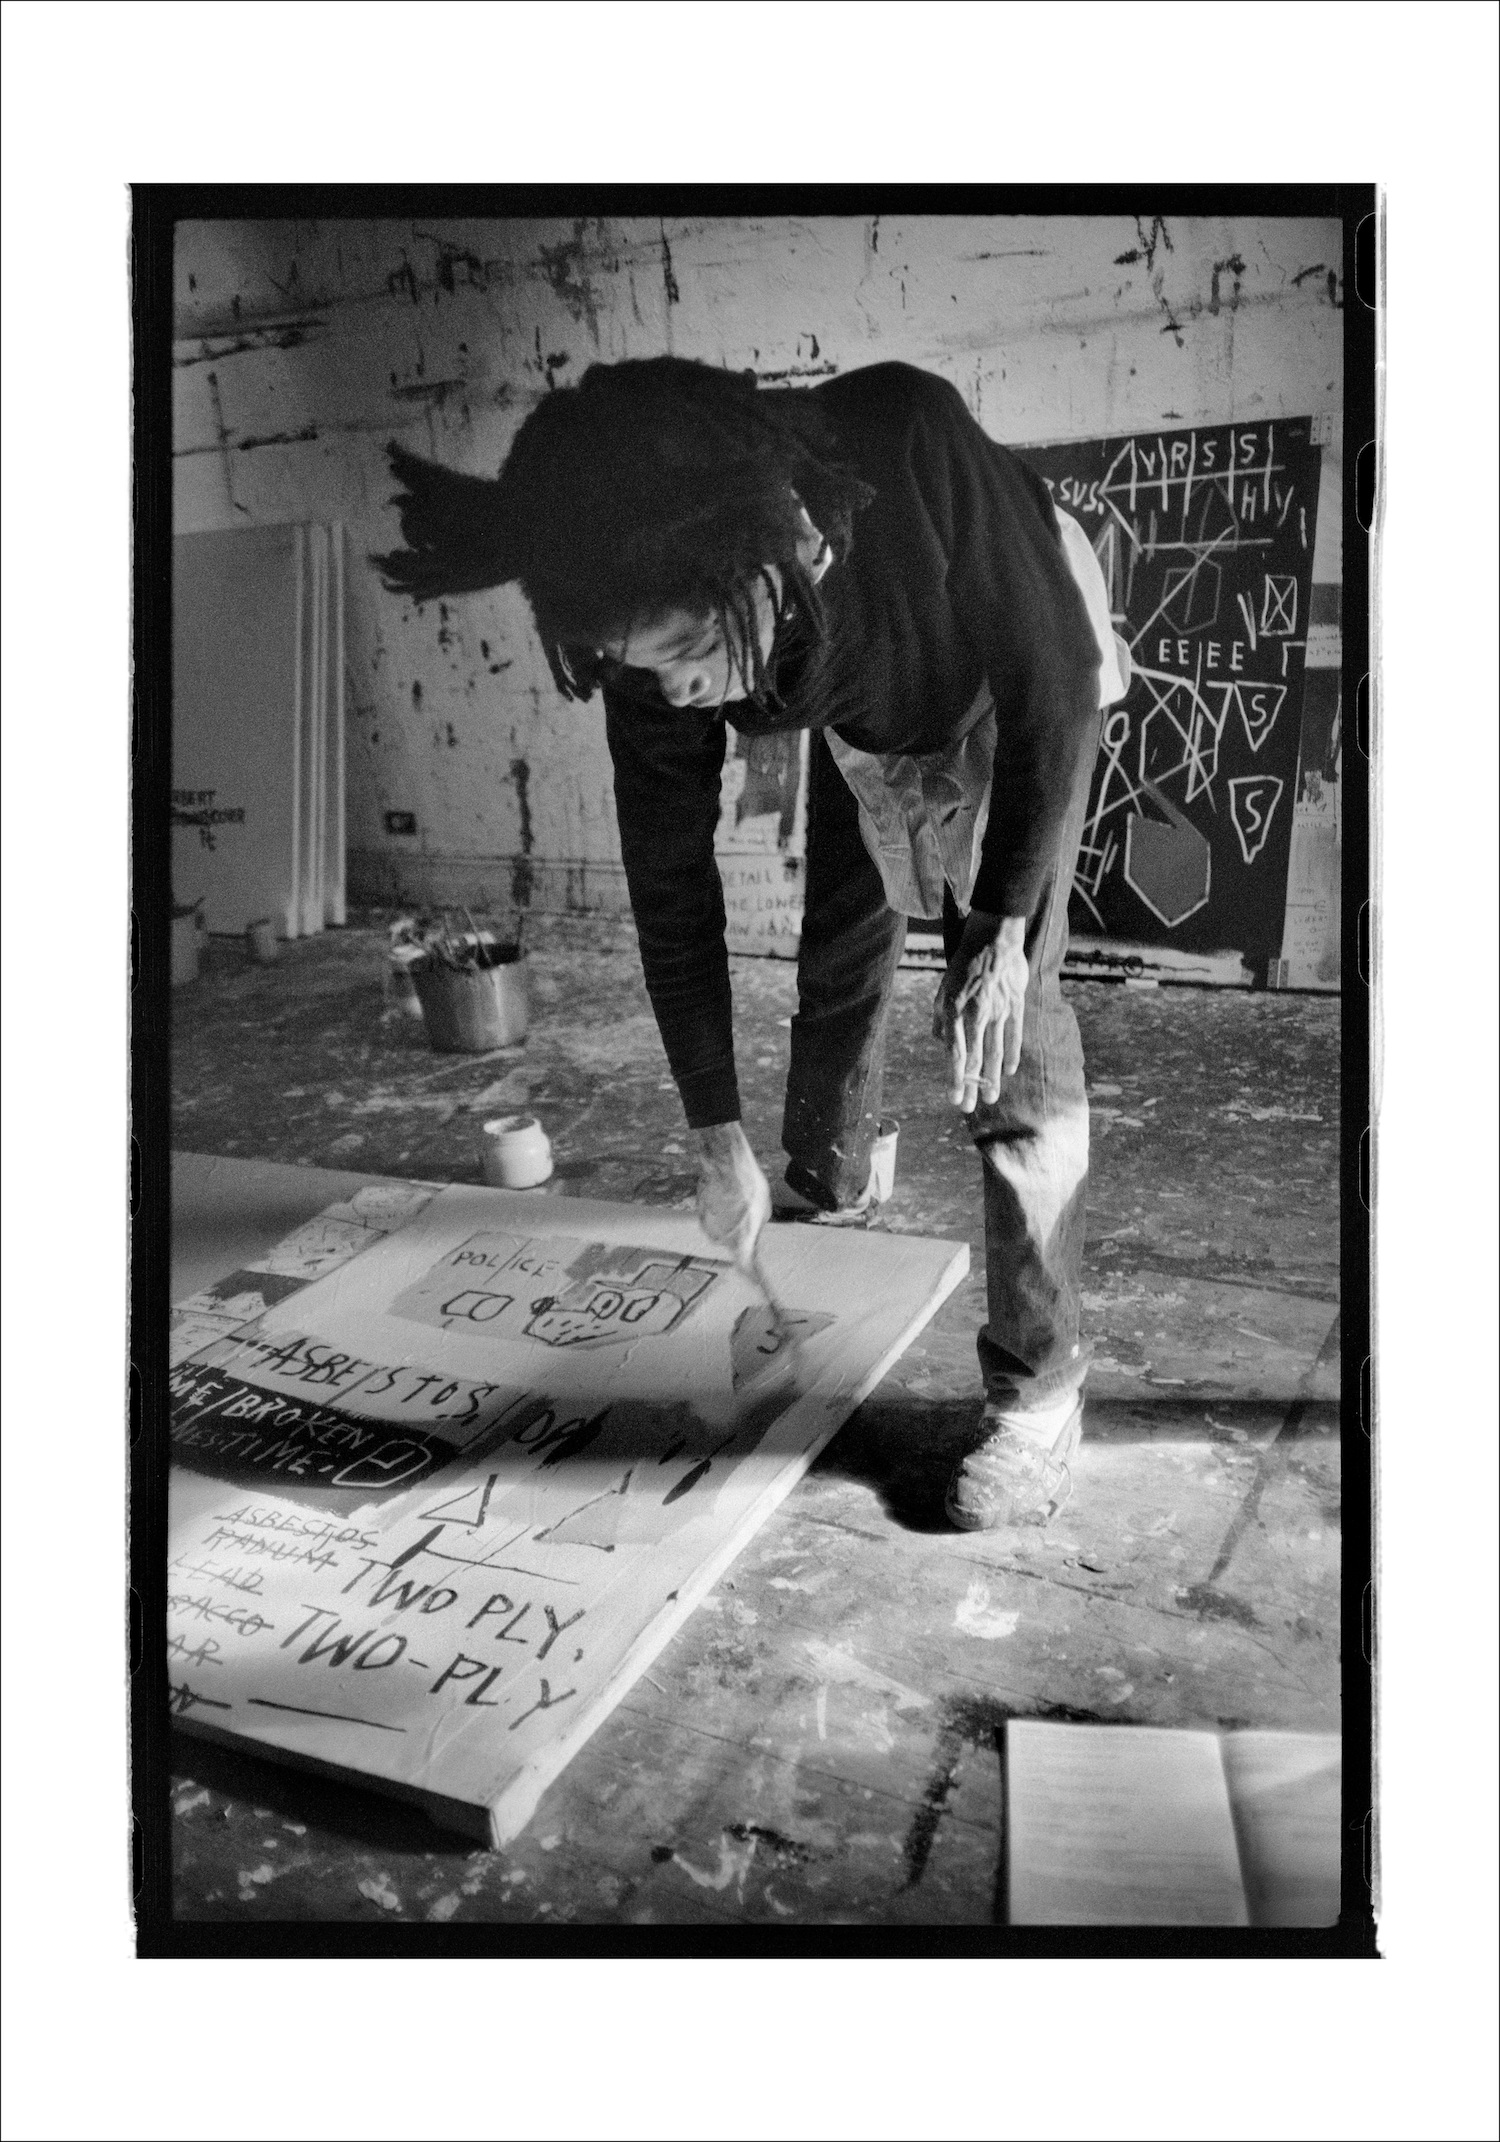 Jean-Michel Basquiat painting, 1983 © Roland Hagenberg